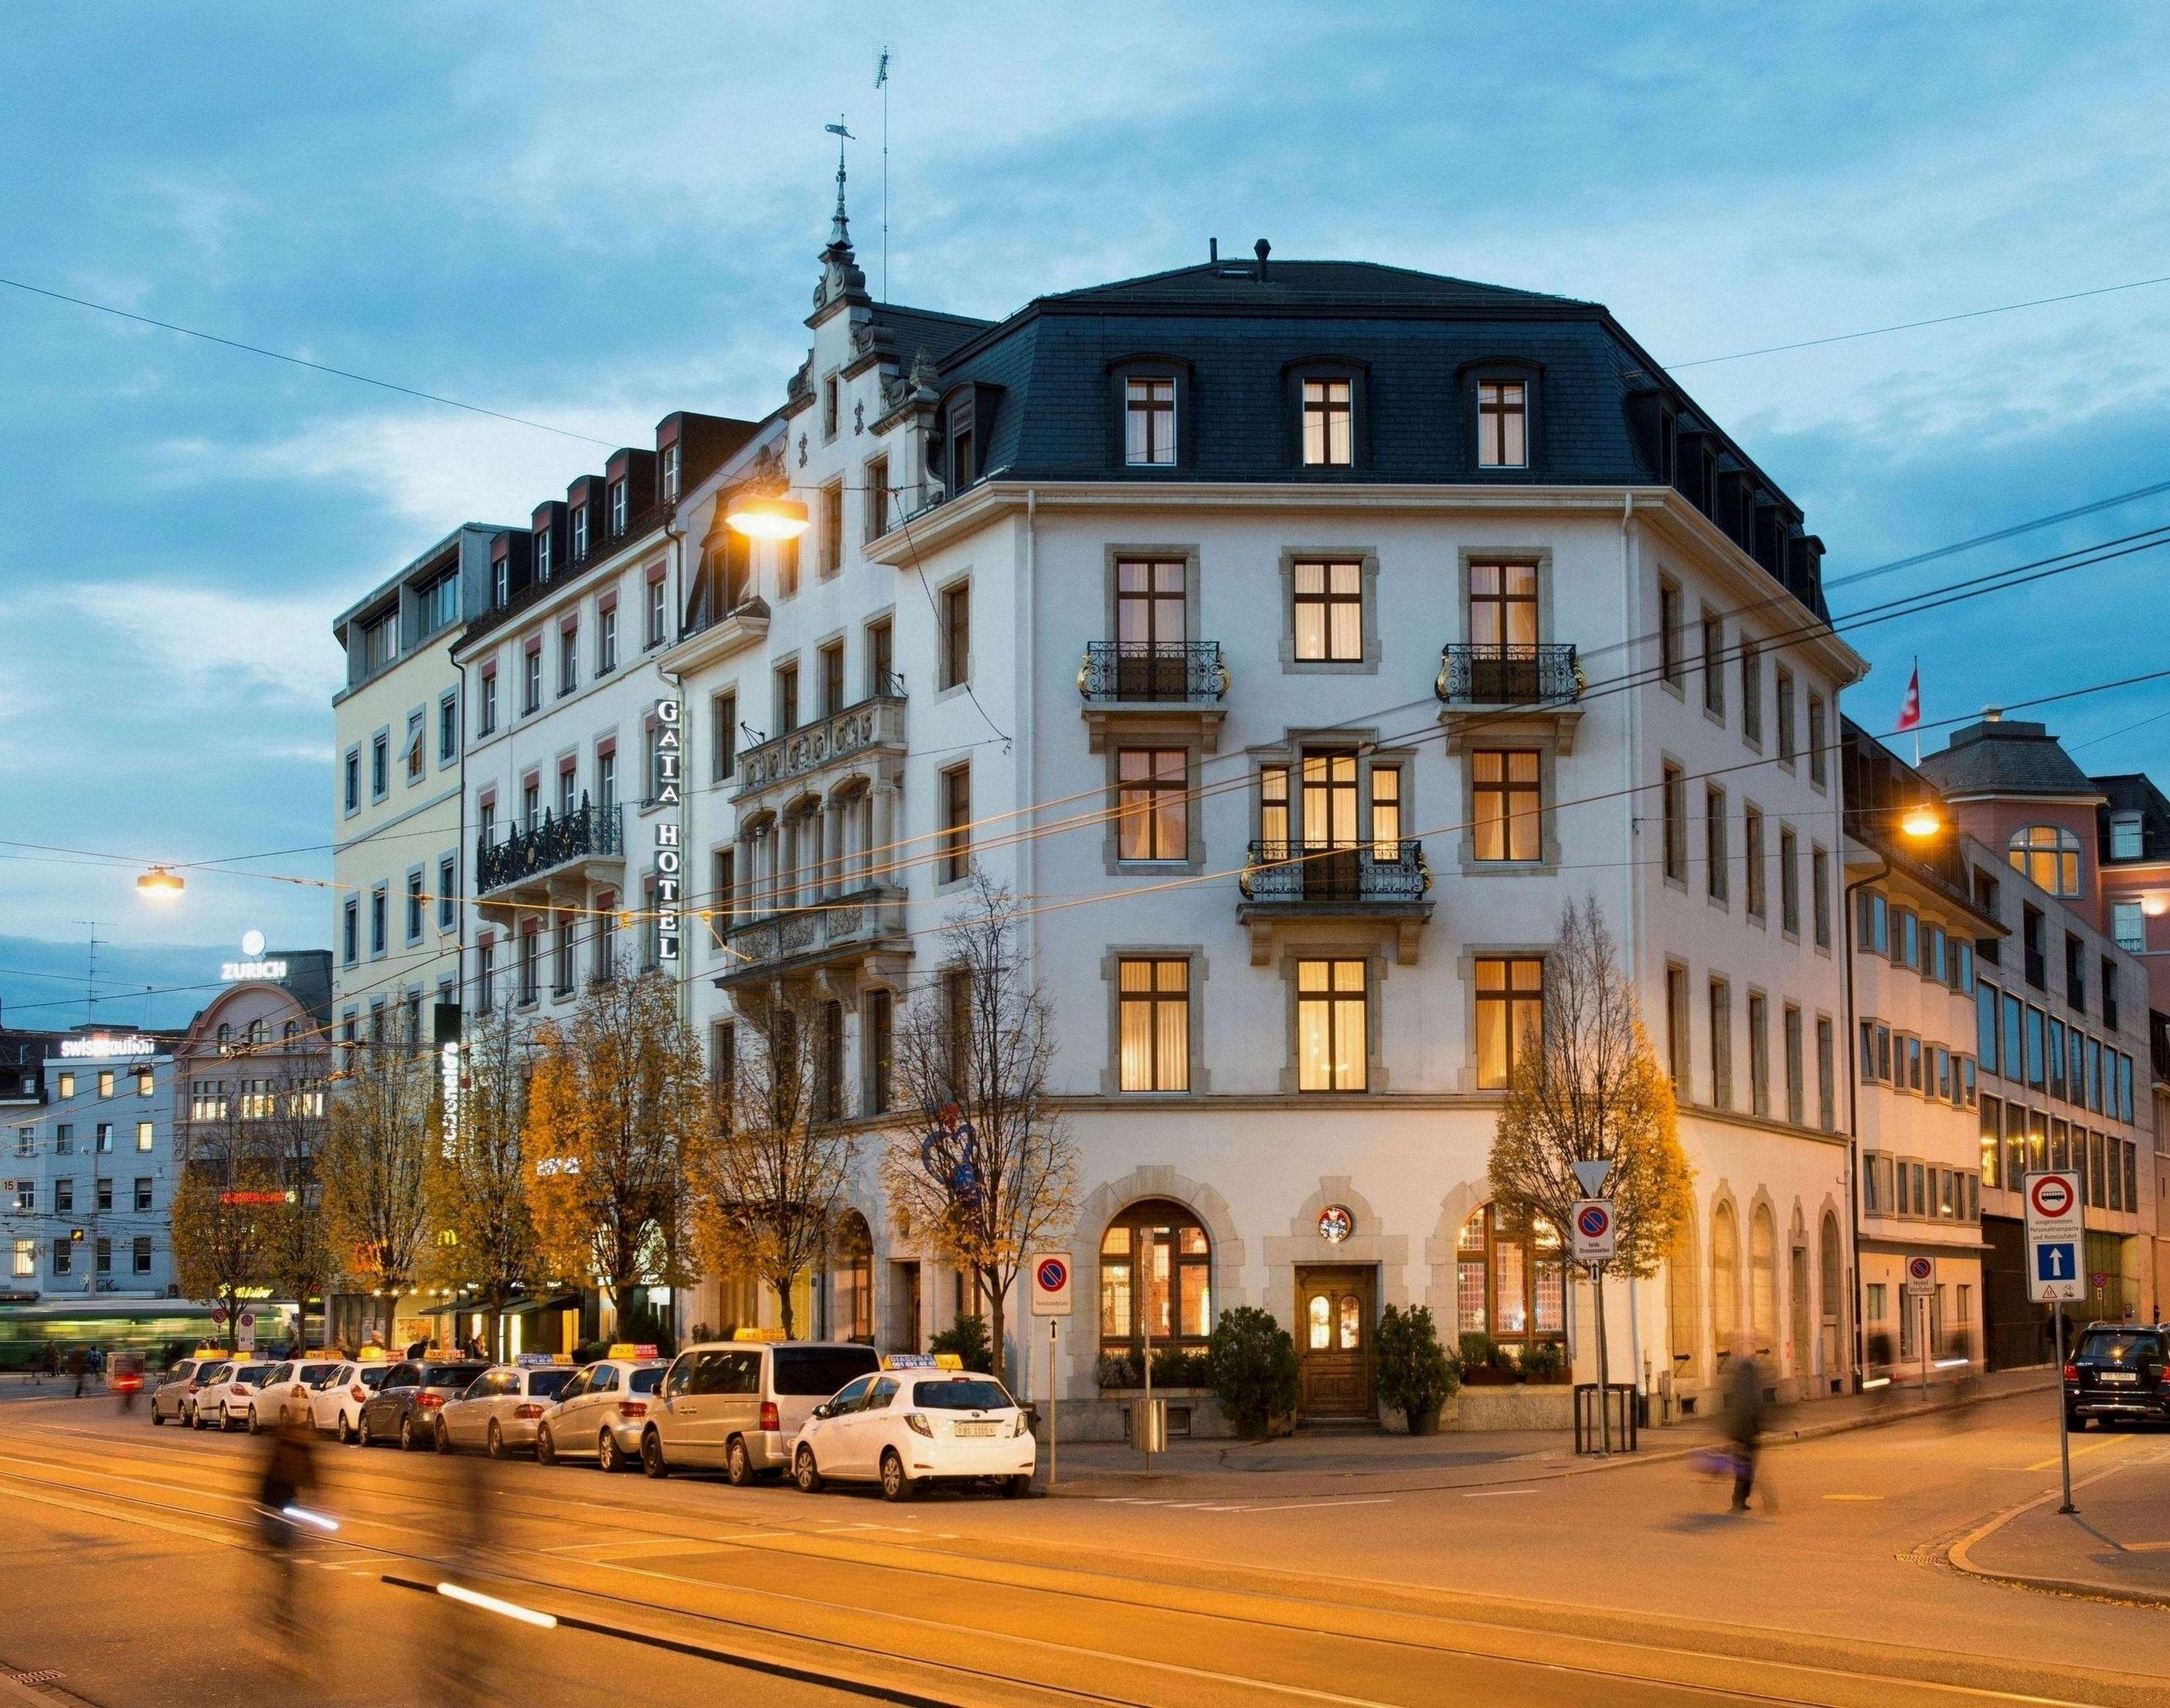 Gaia Hotel in Basel, Switzerland